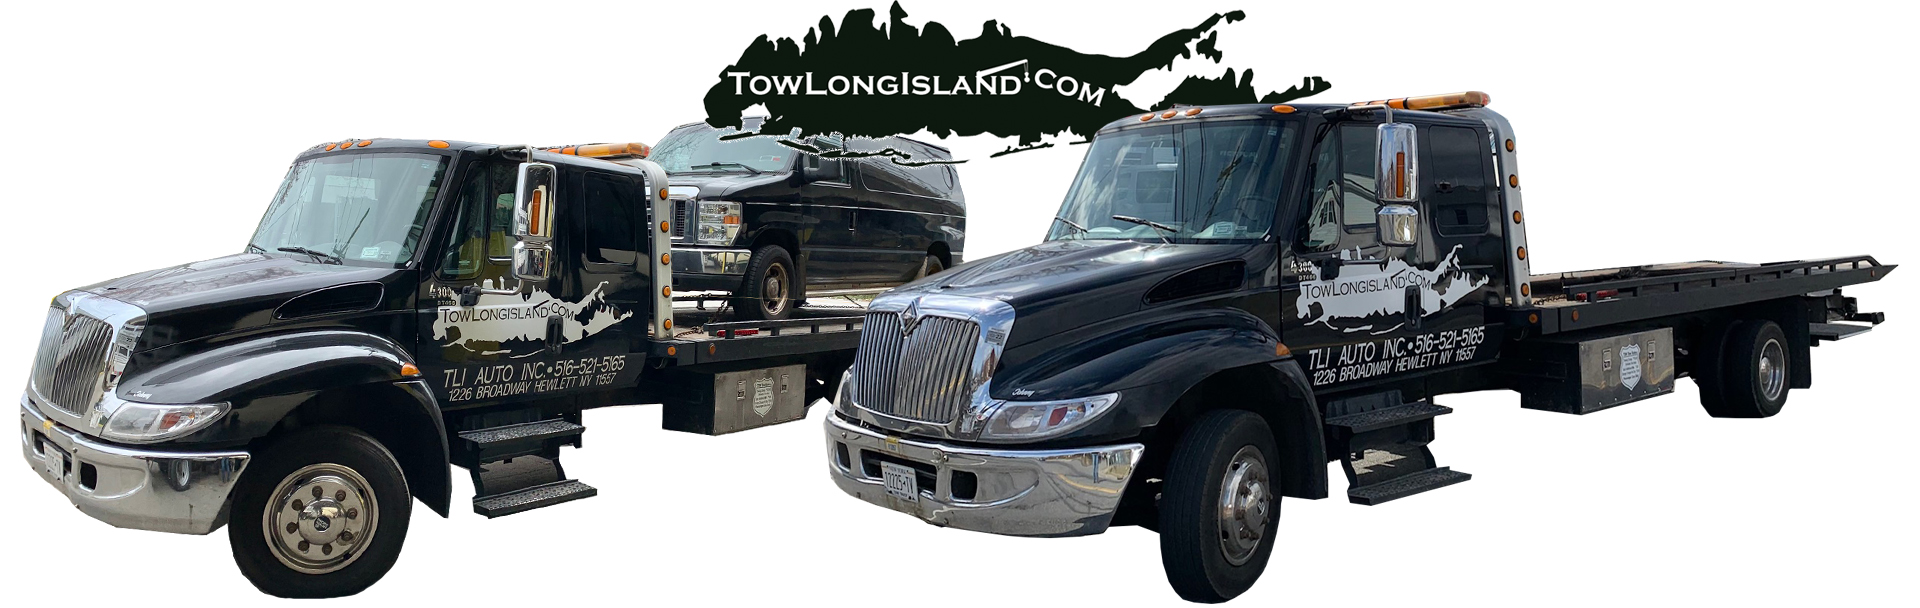 TowLongIsland.com | Junk Car Removal | Flat Bed Tow Truck Professional Services | West Babylon, Long Island, New York